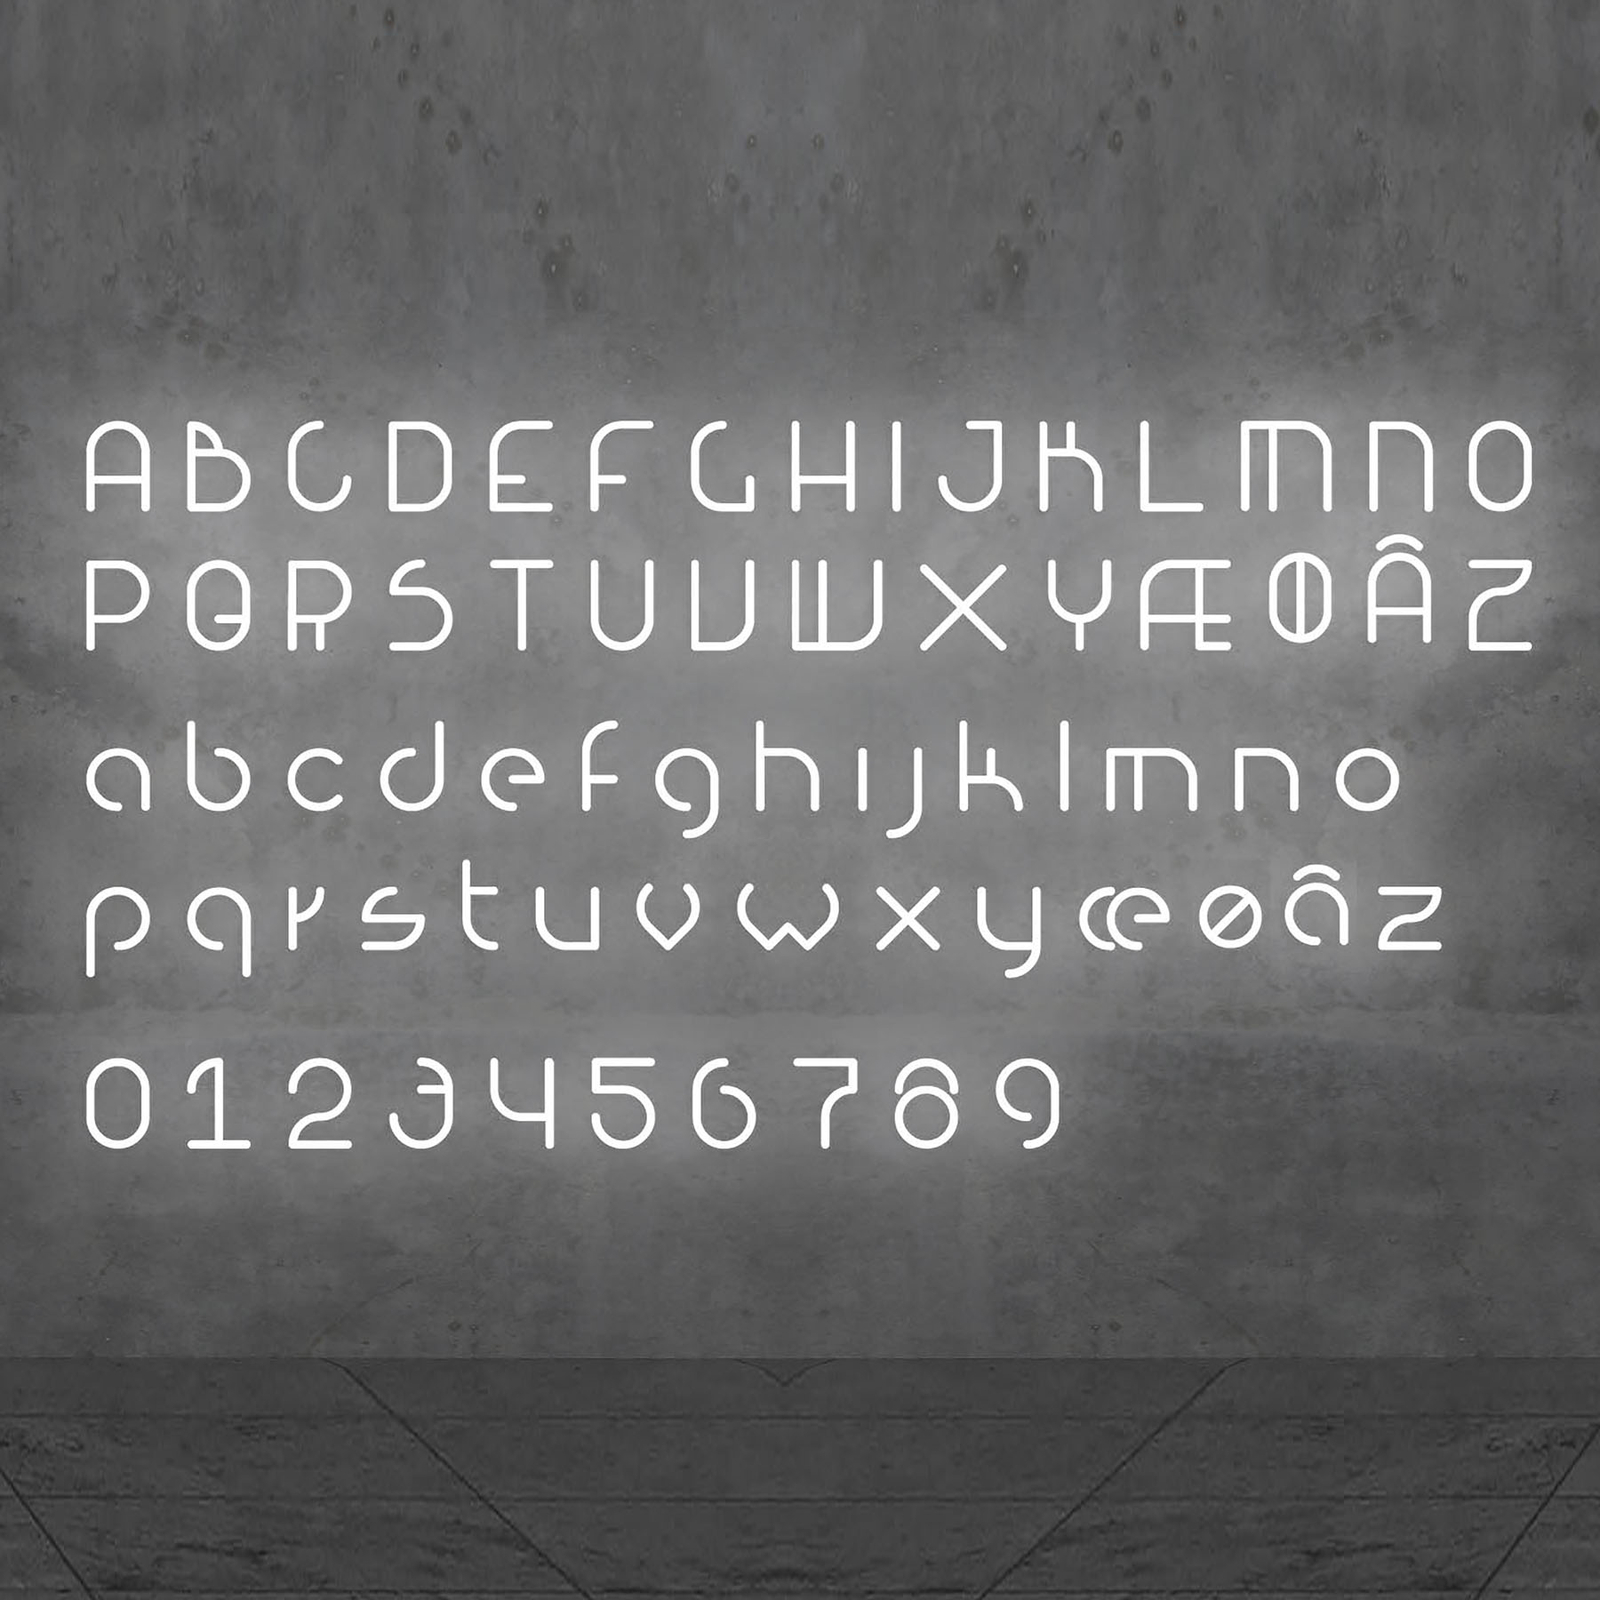 Artemide Alphabet of Light ściana wielka litera P